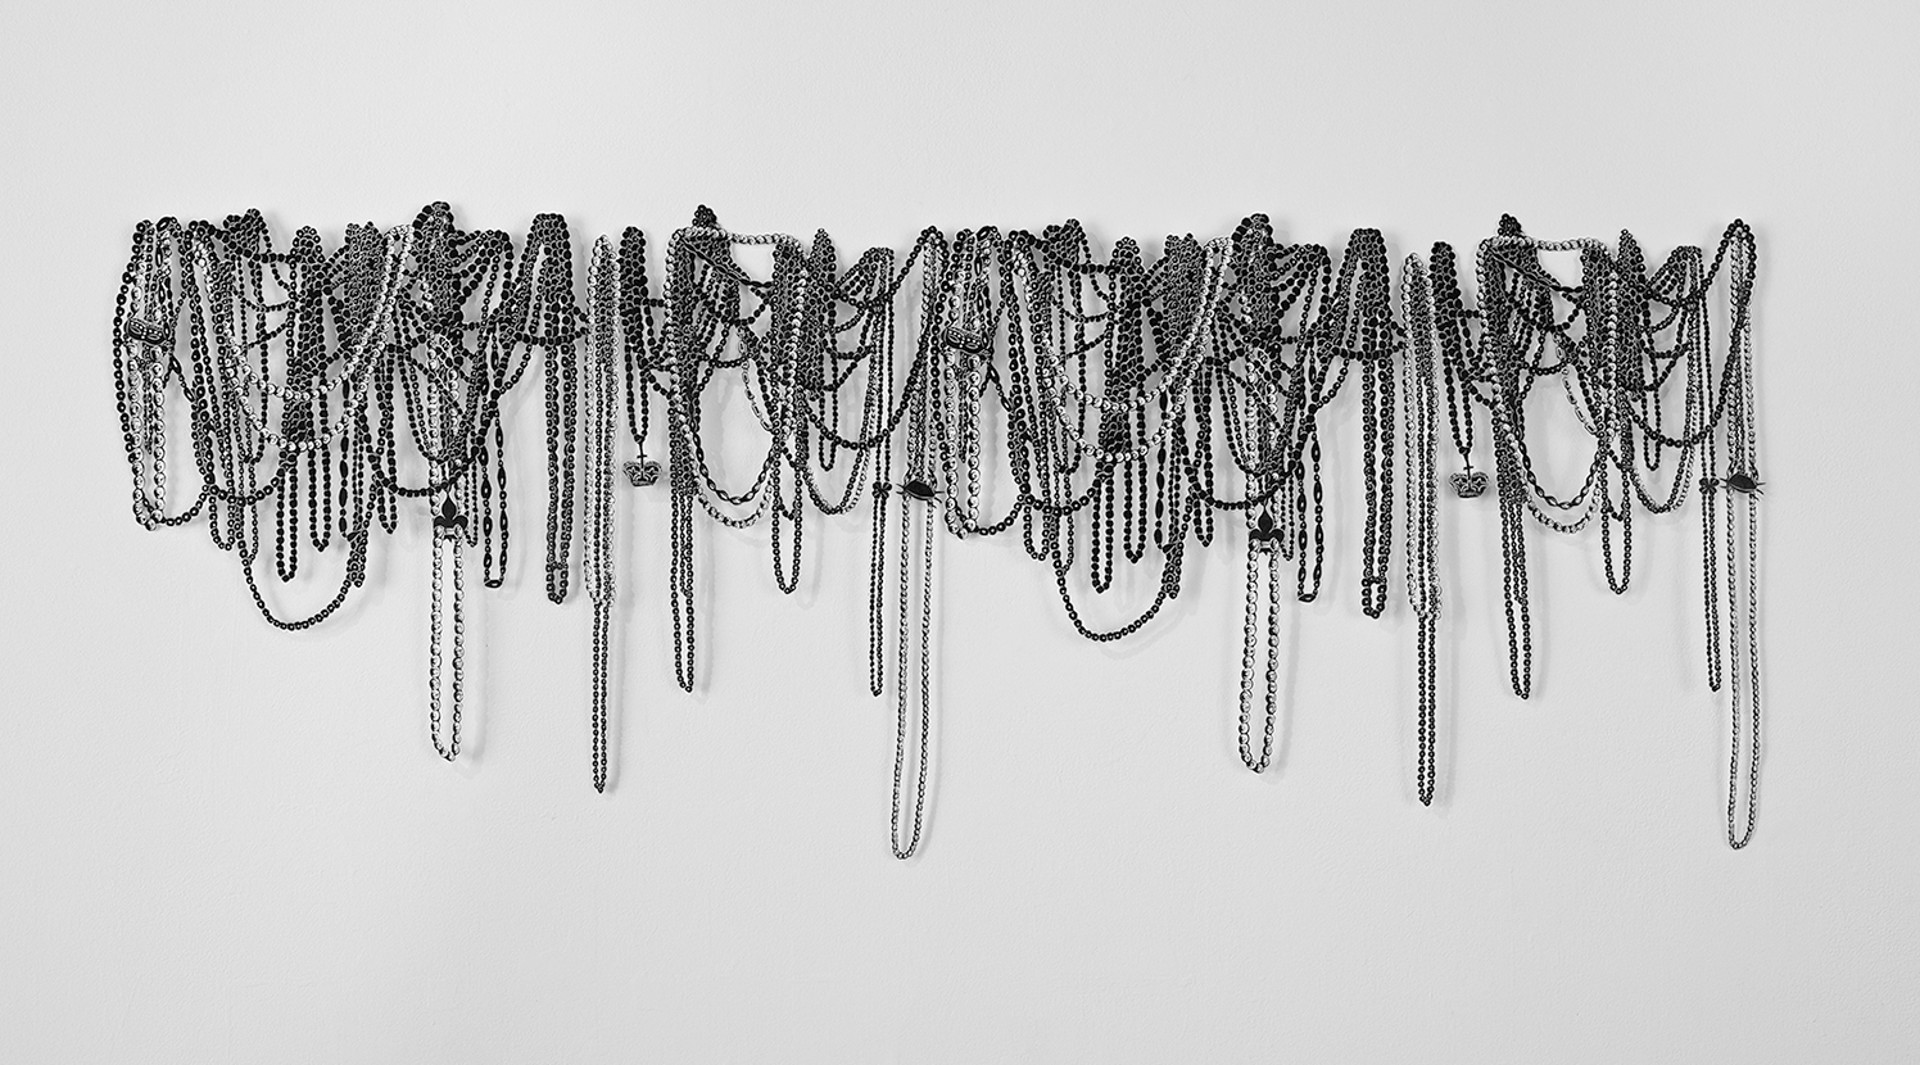 Hanging Beads by Masy Chighizola